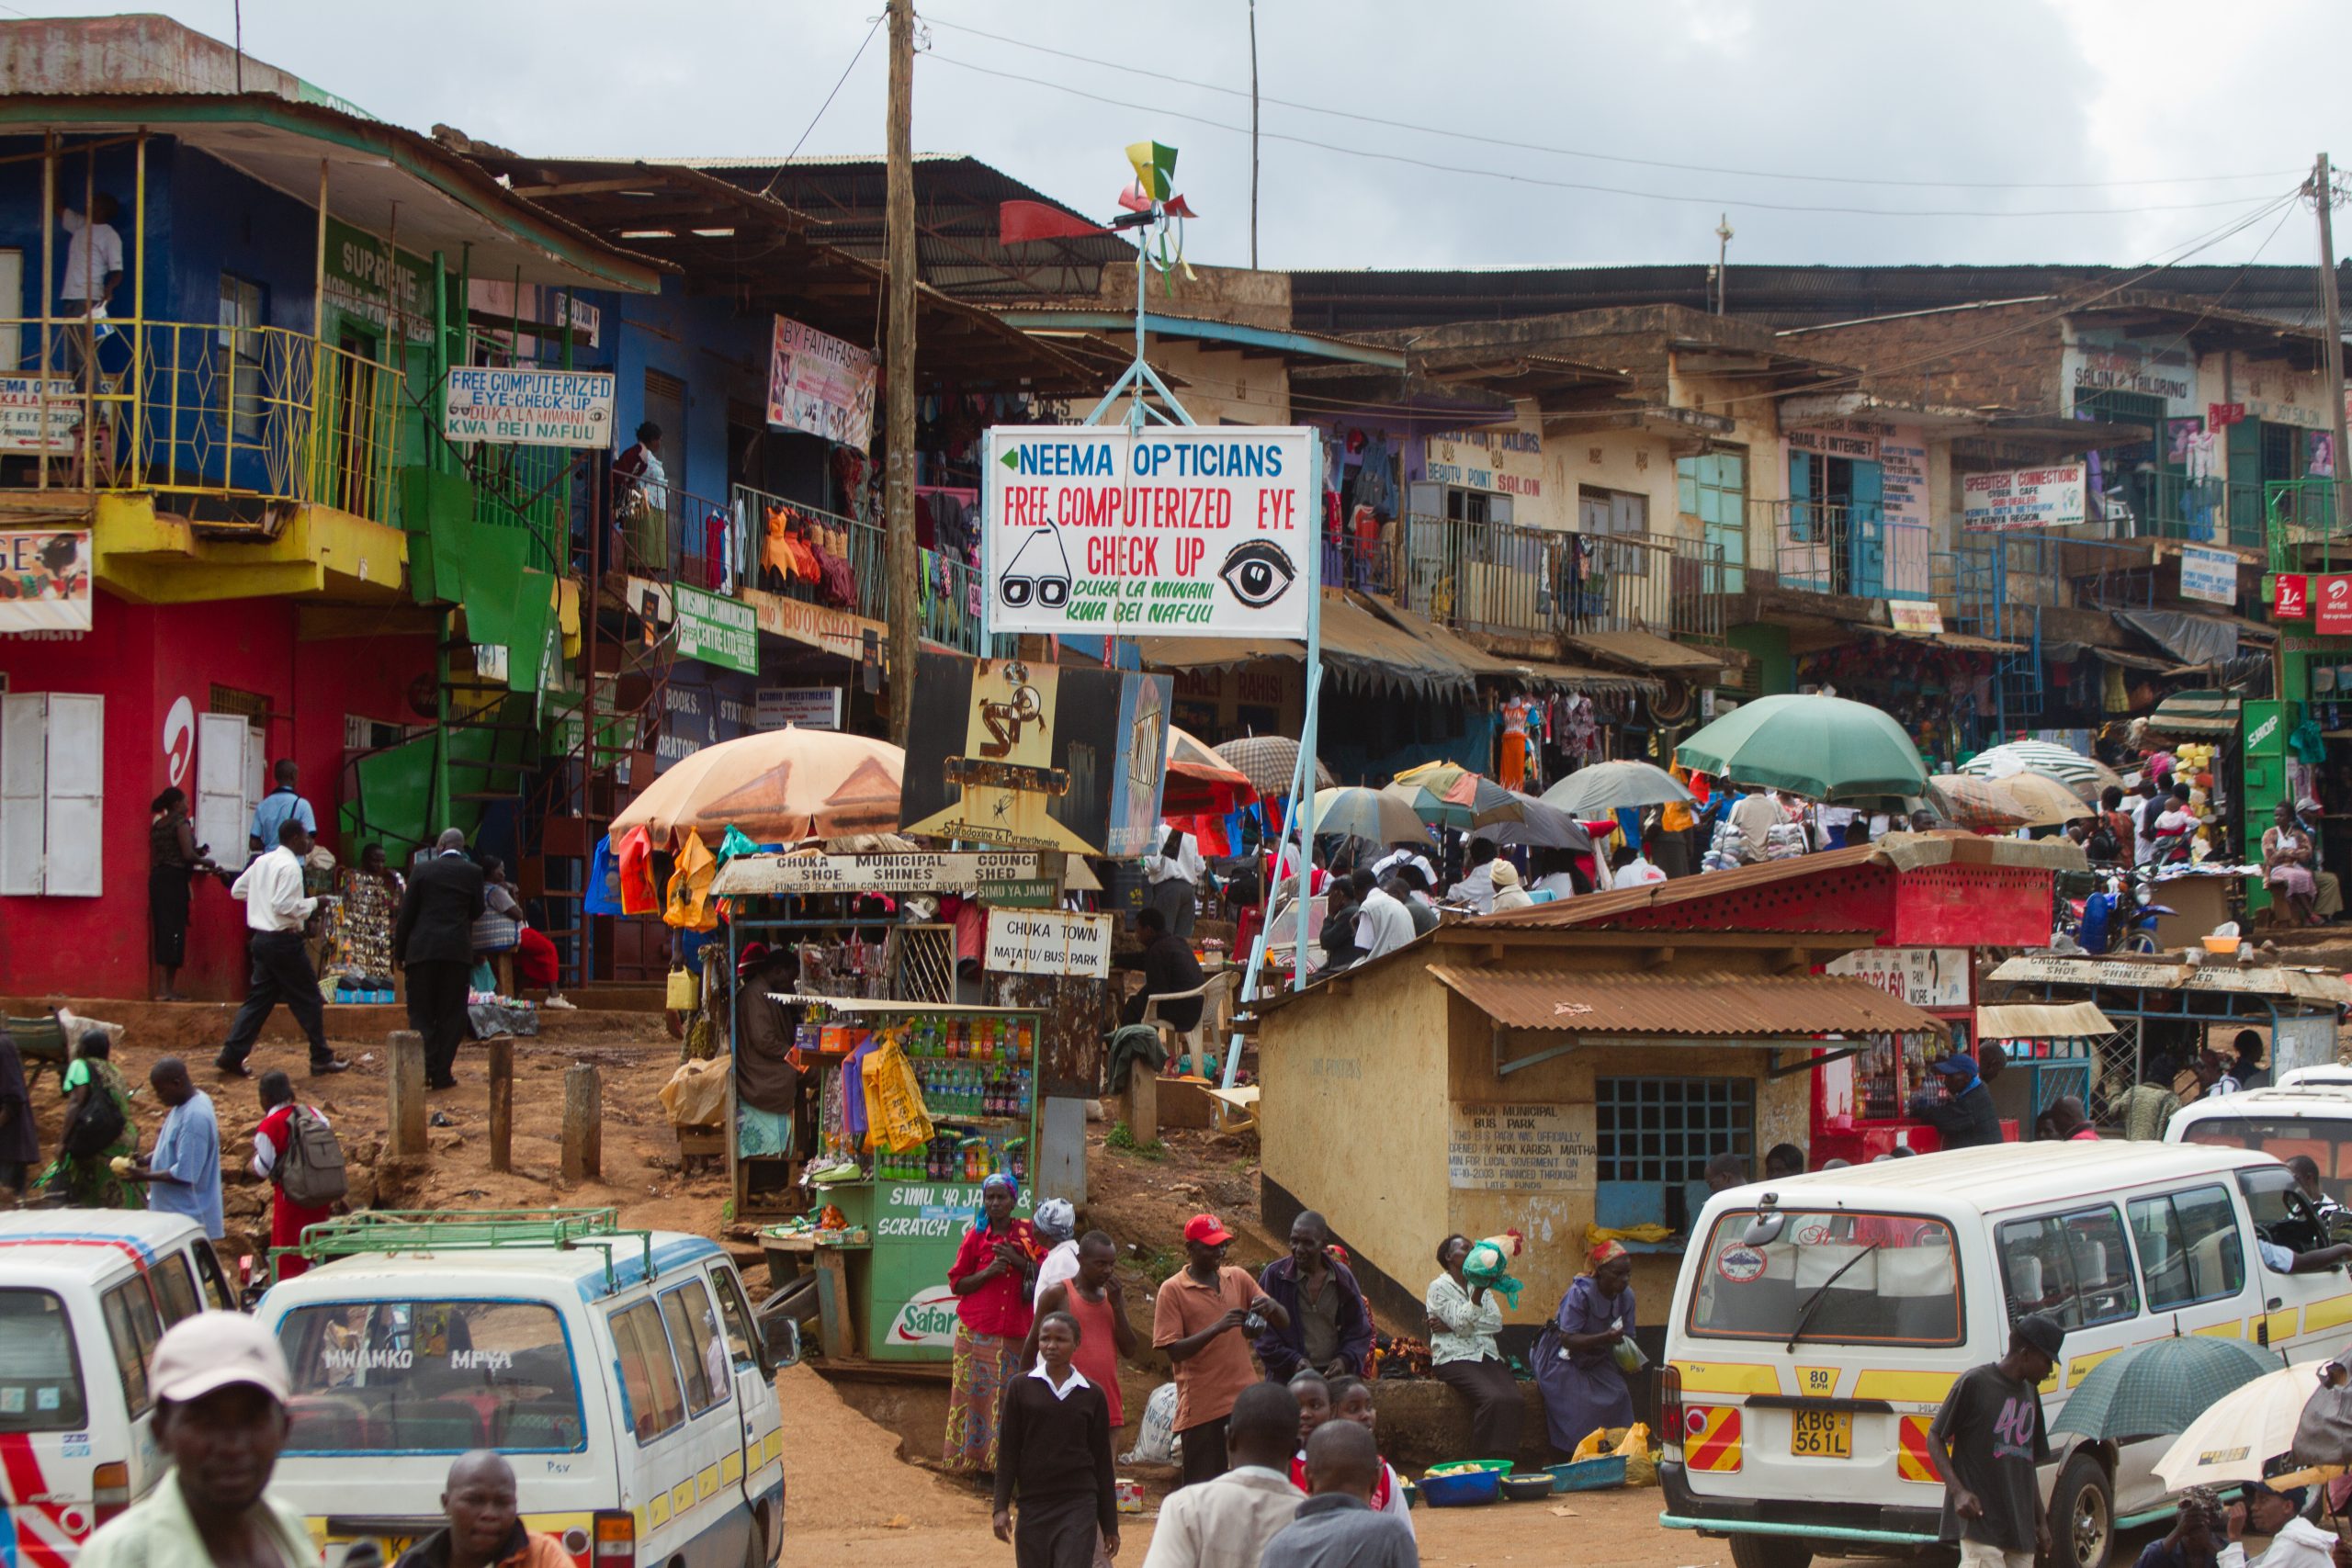 A busy street scene in Nairobi, Kenya